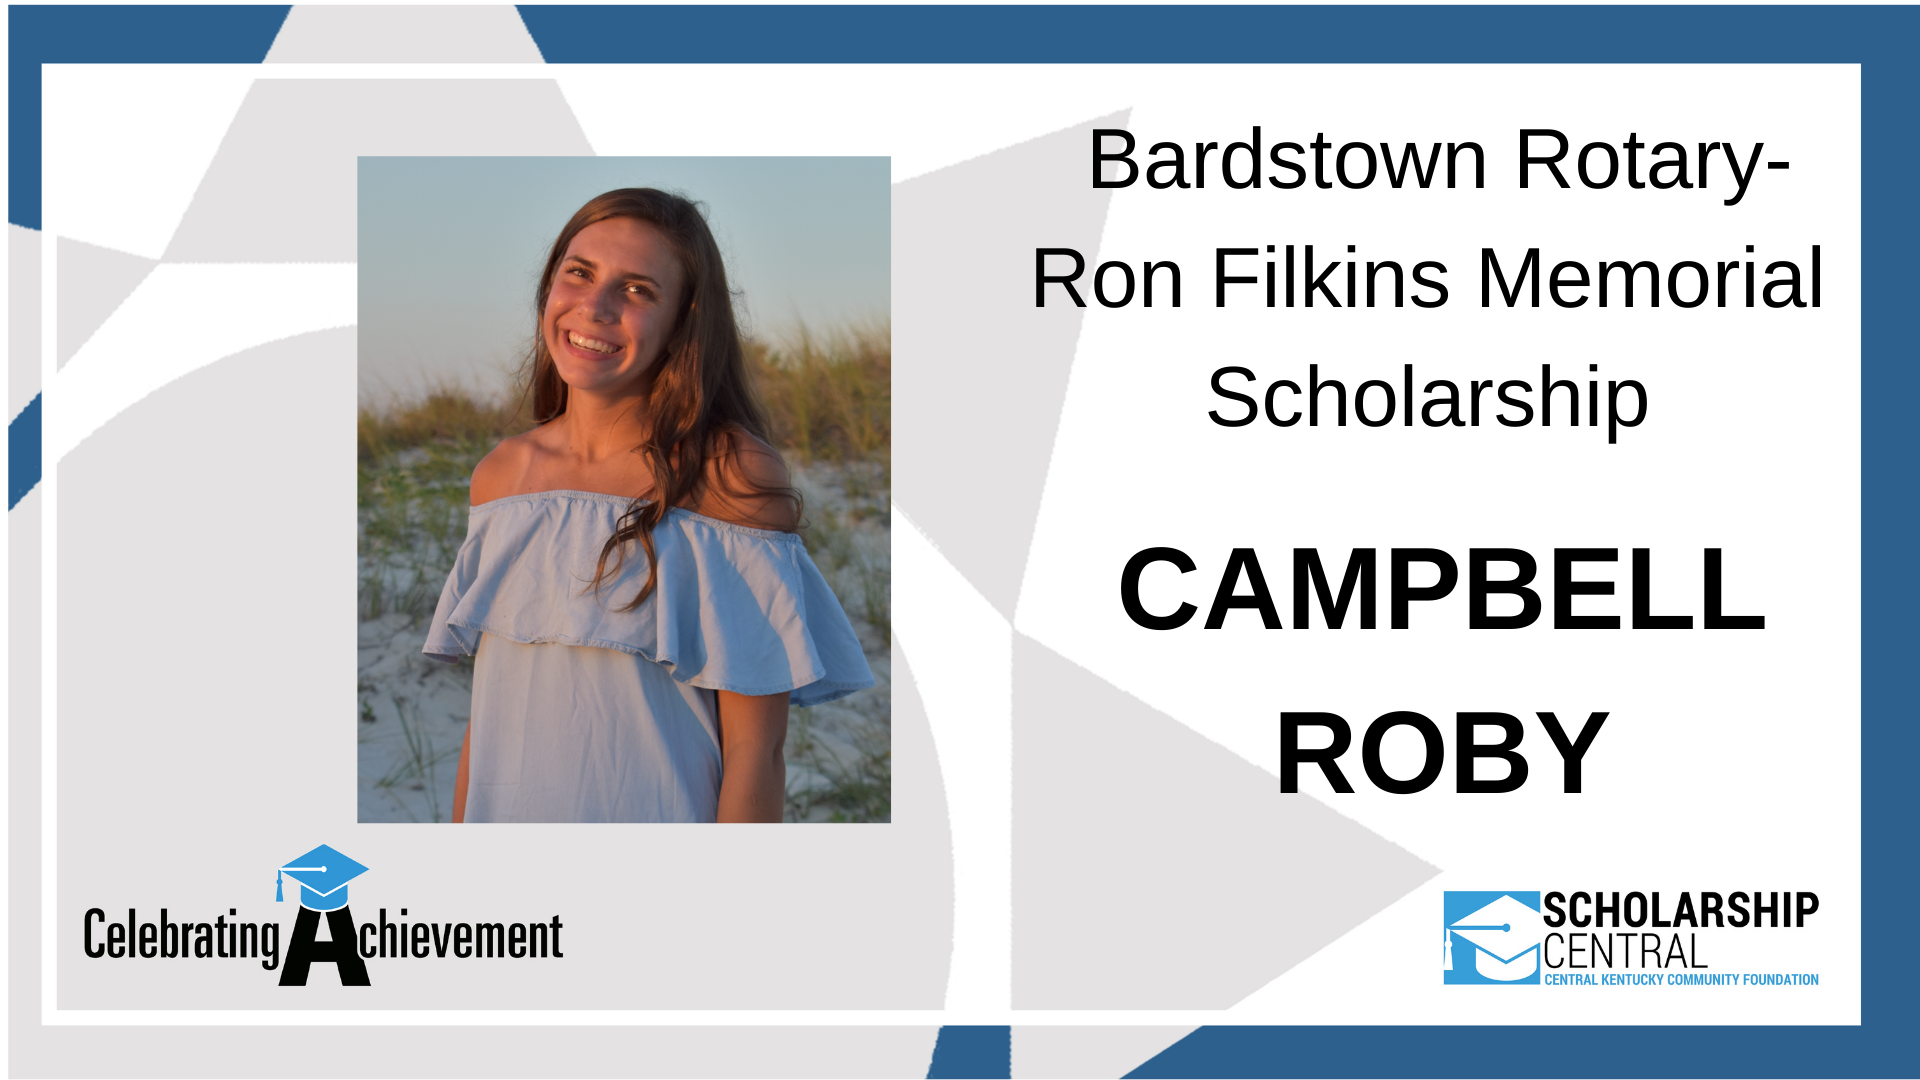 Bardstown Rotary Ron Filkins Memorial Scholarship Winner